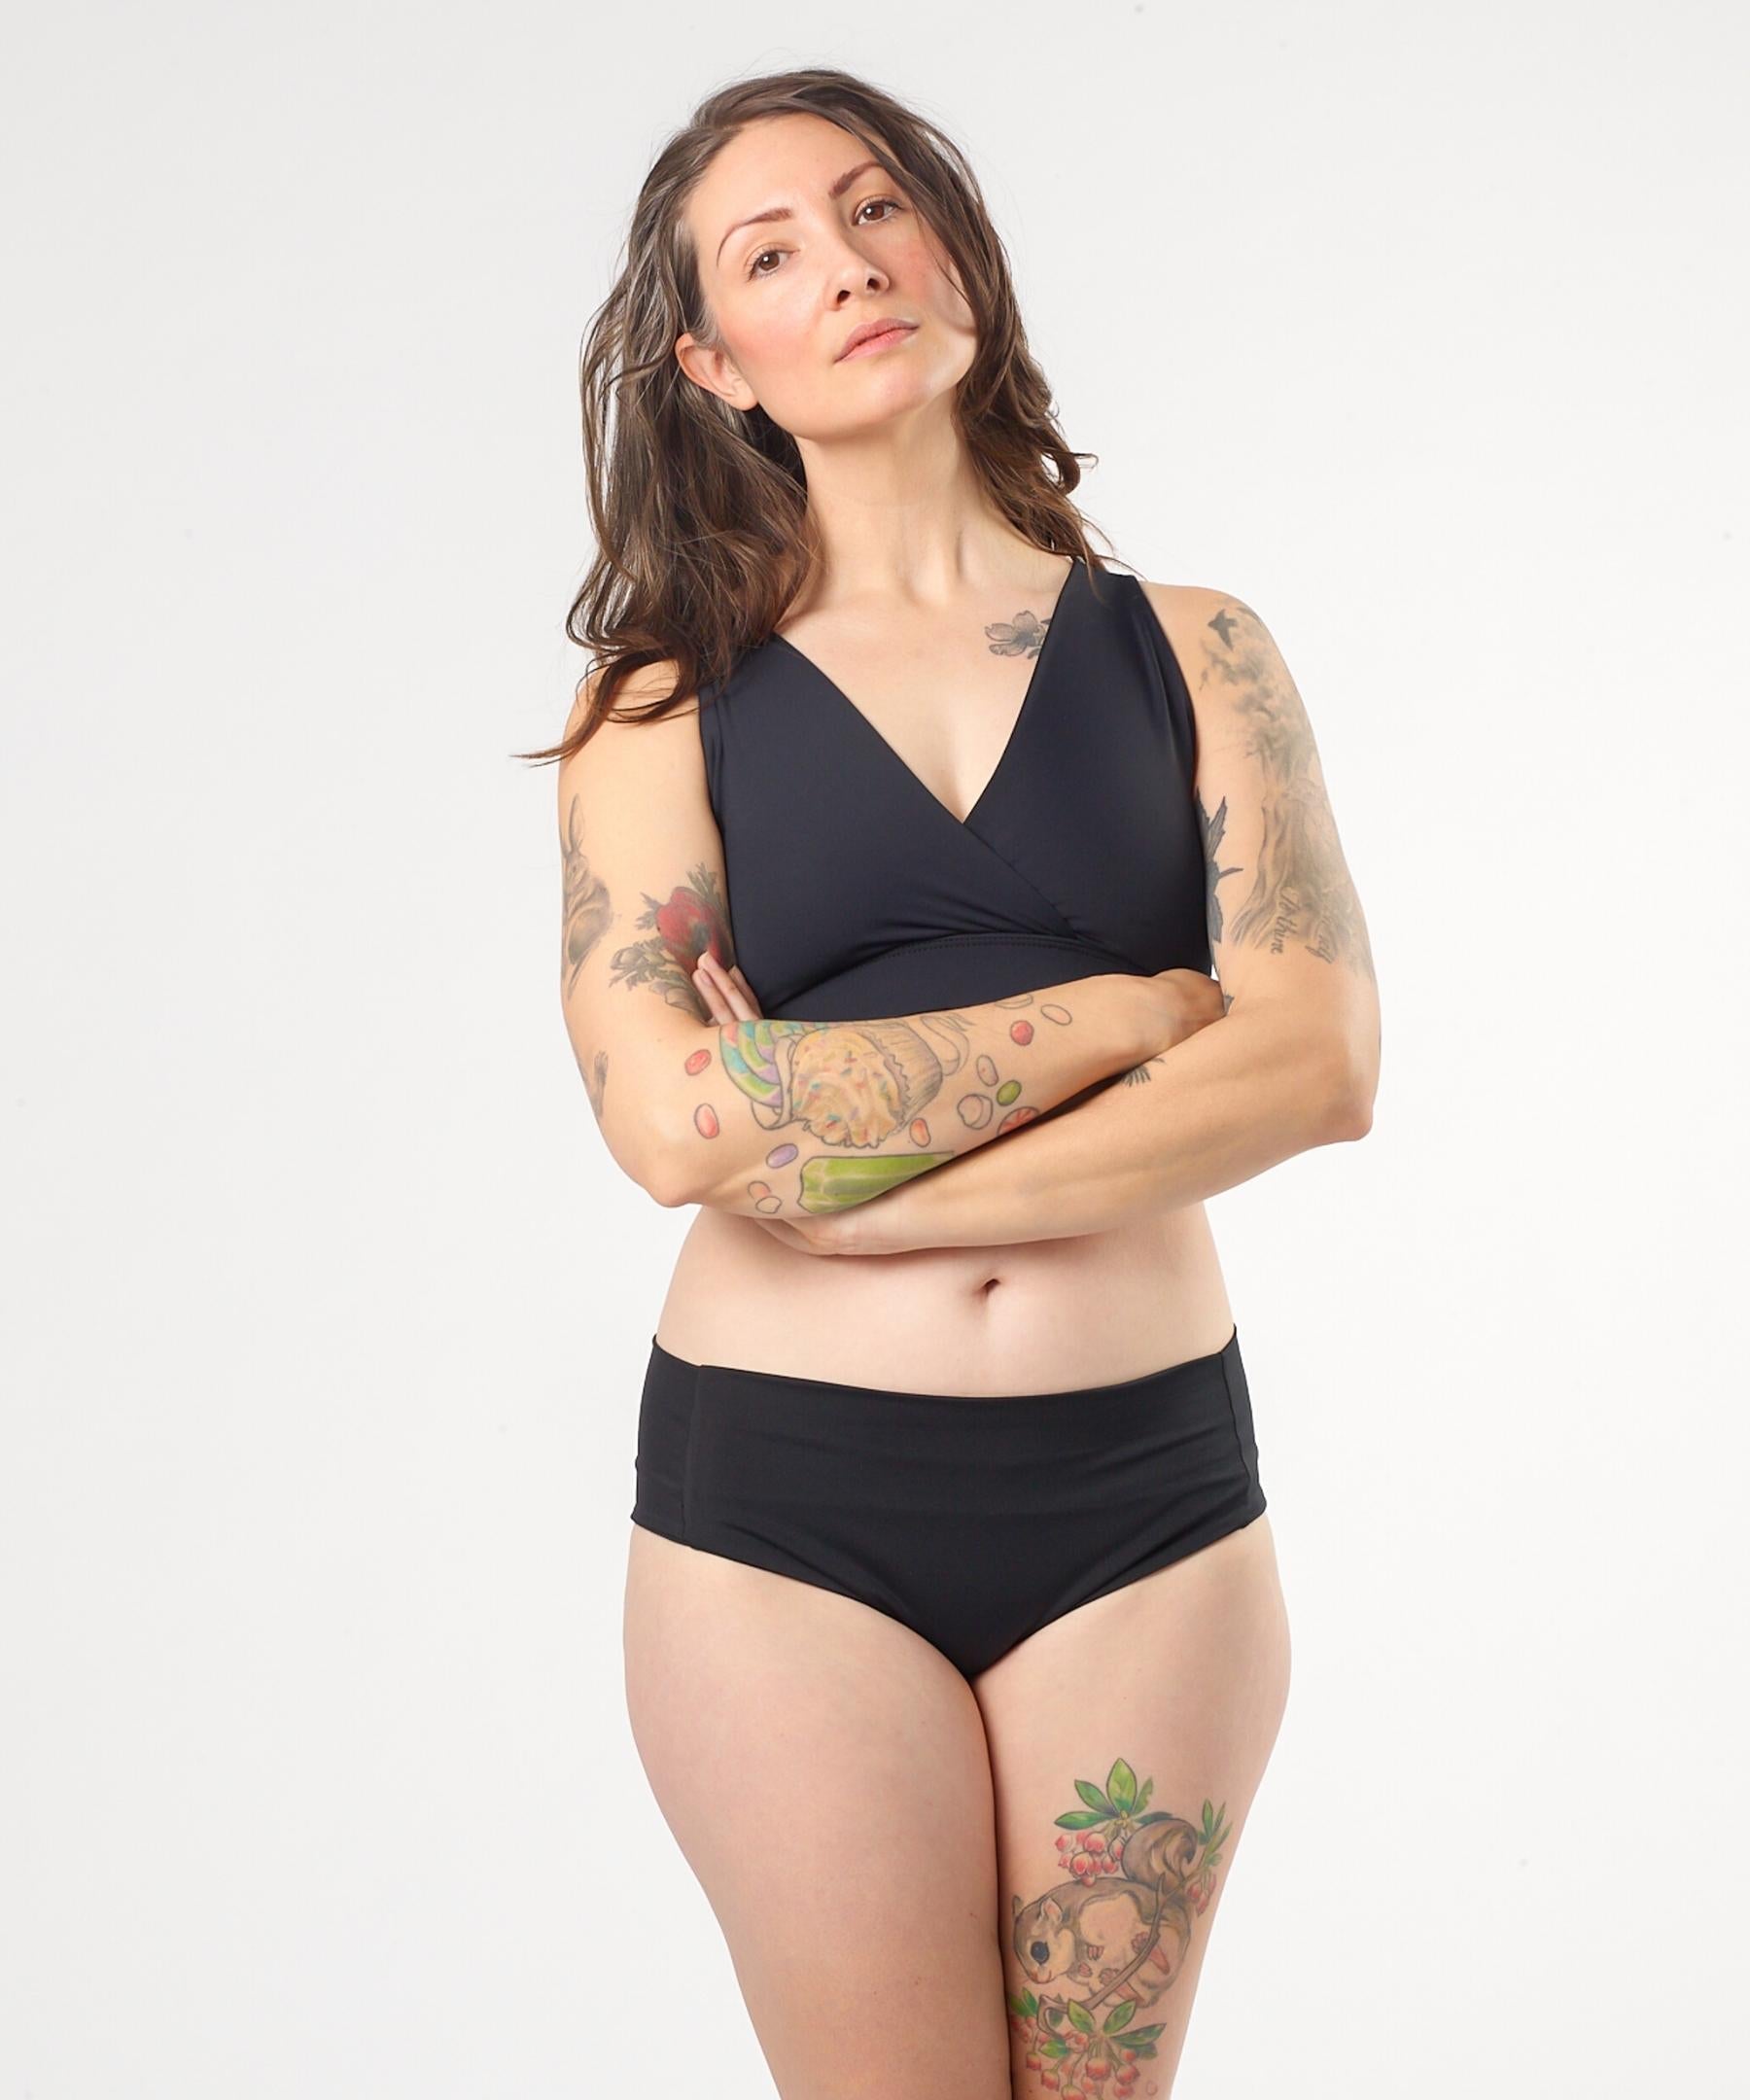 Model in Nyssa VieWear Period Comfort Underwear